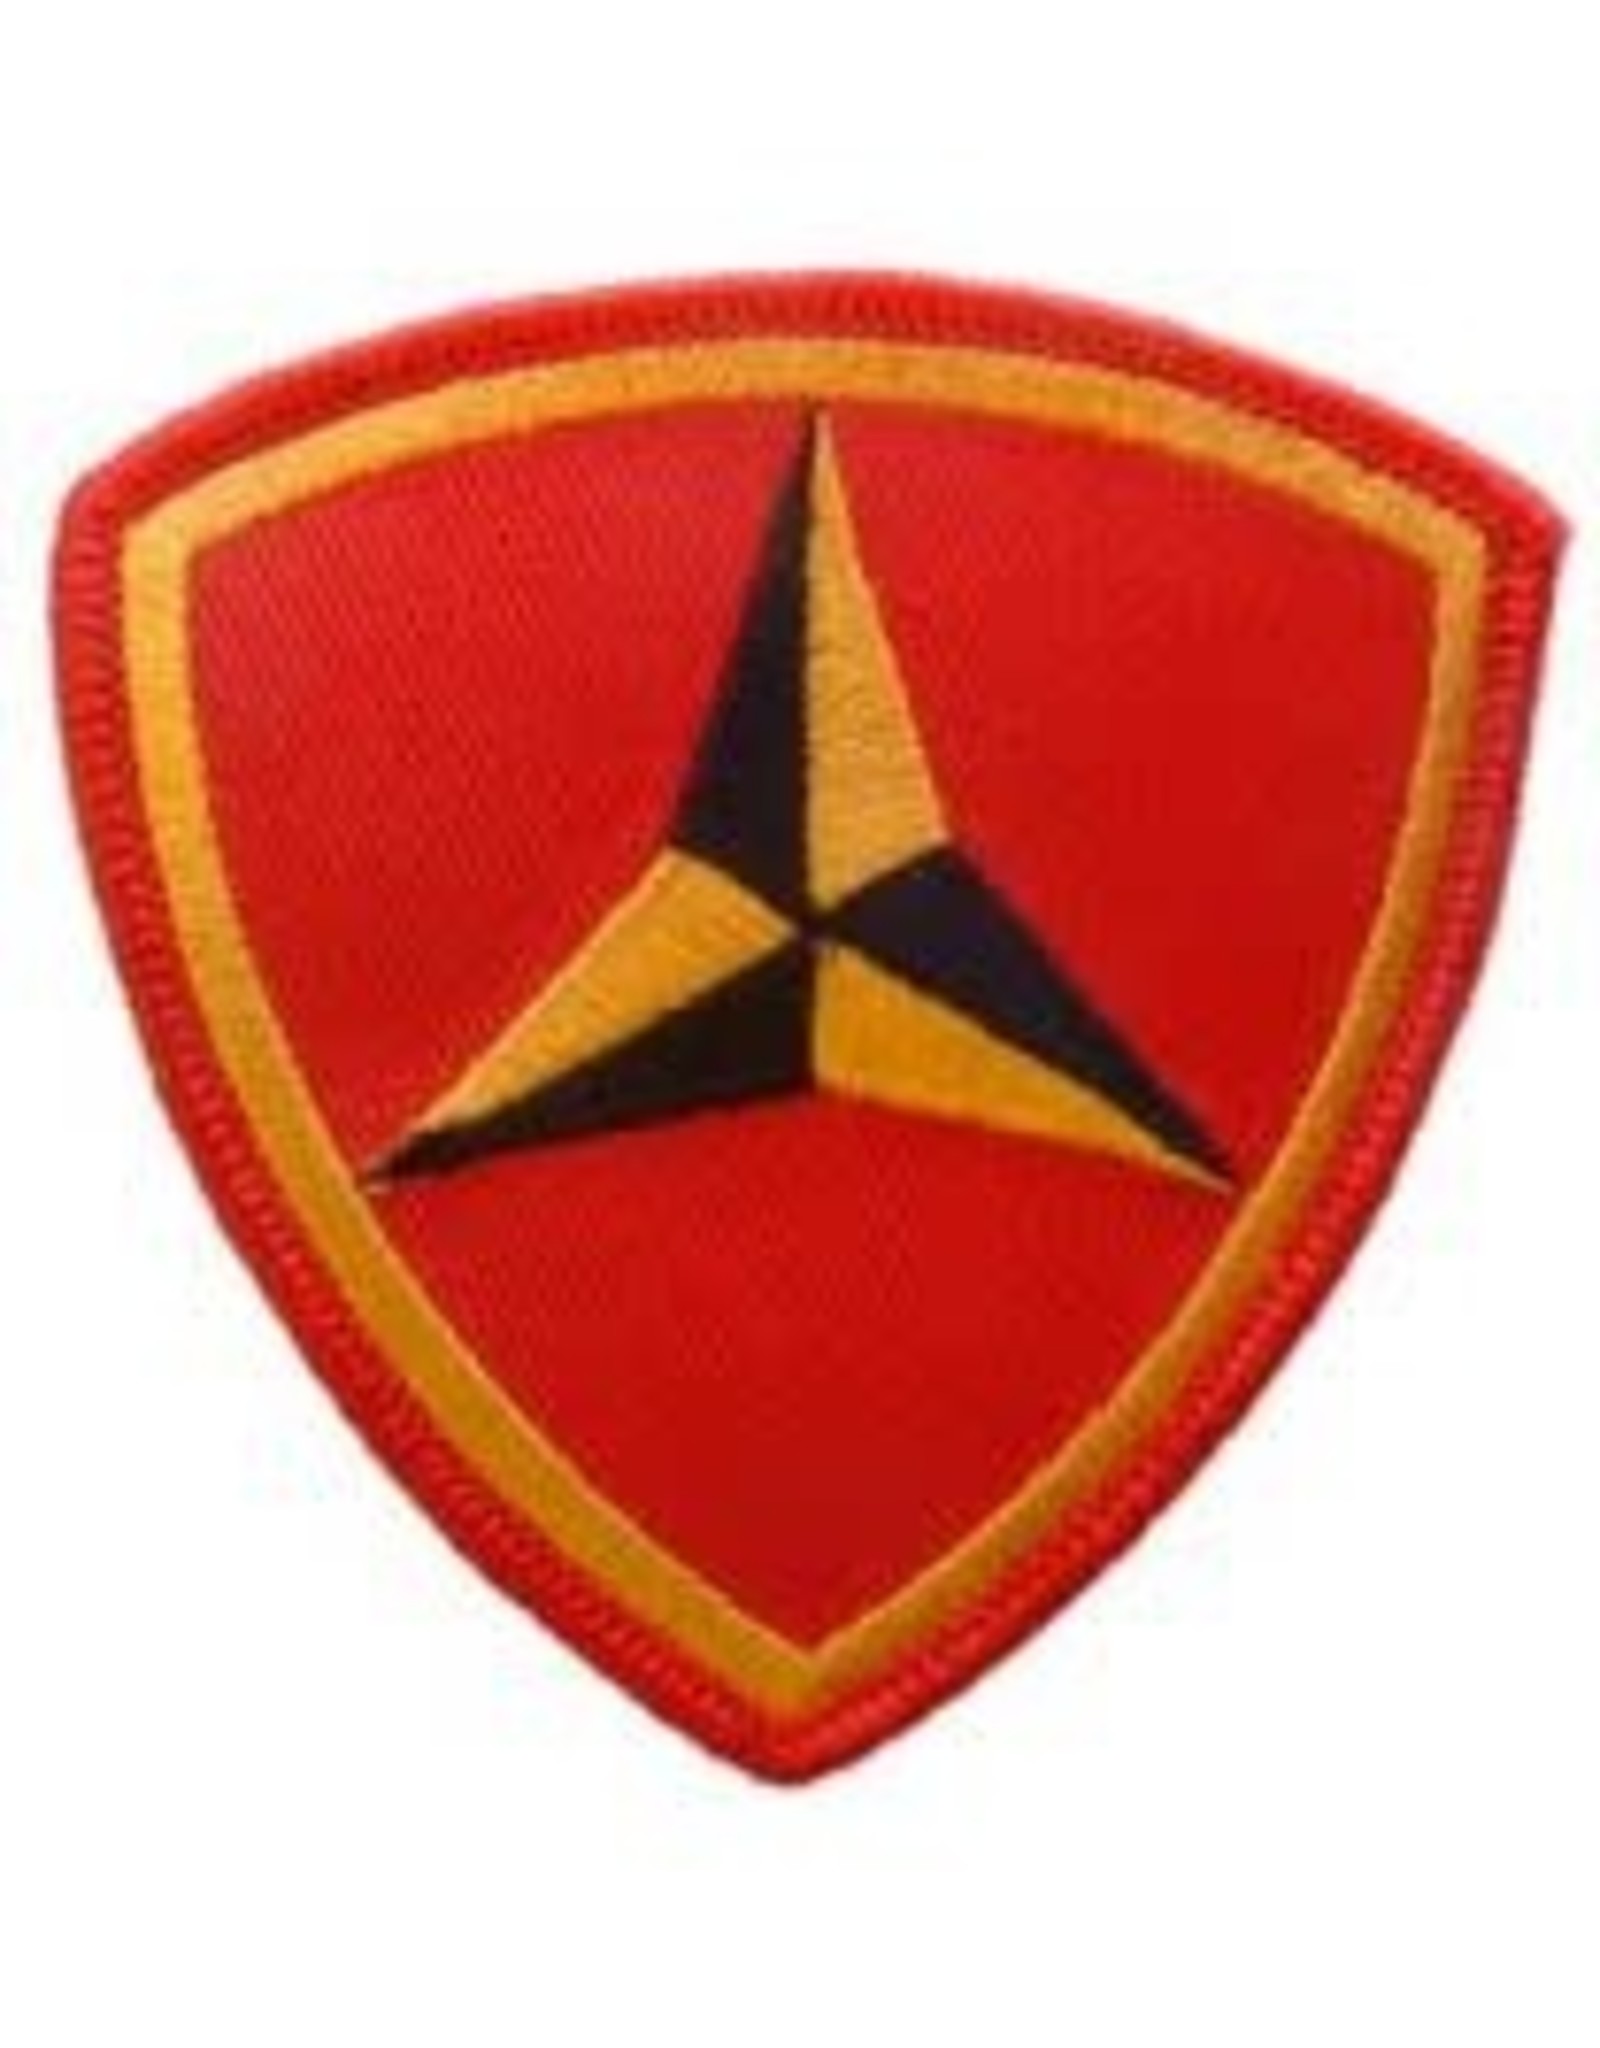 Patch - USMC 3rd Division